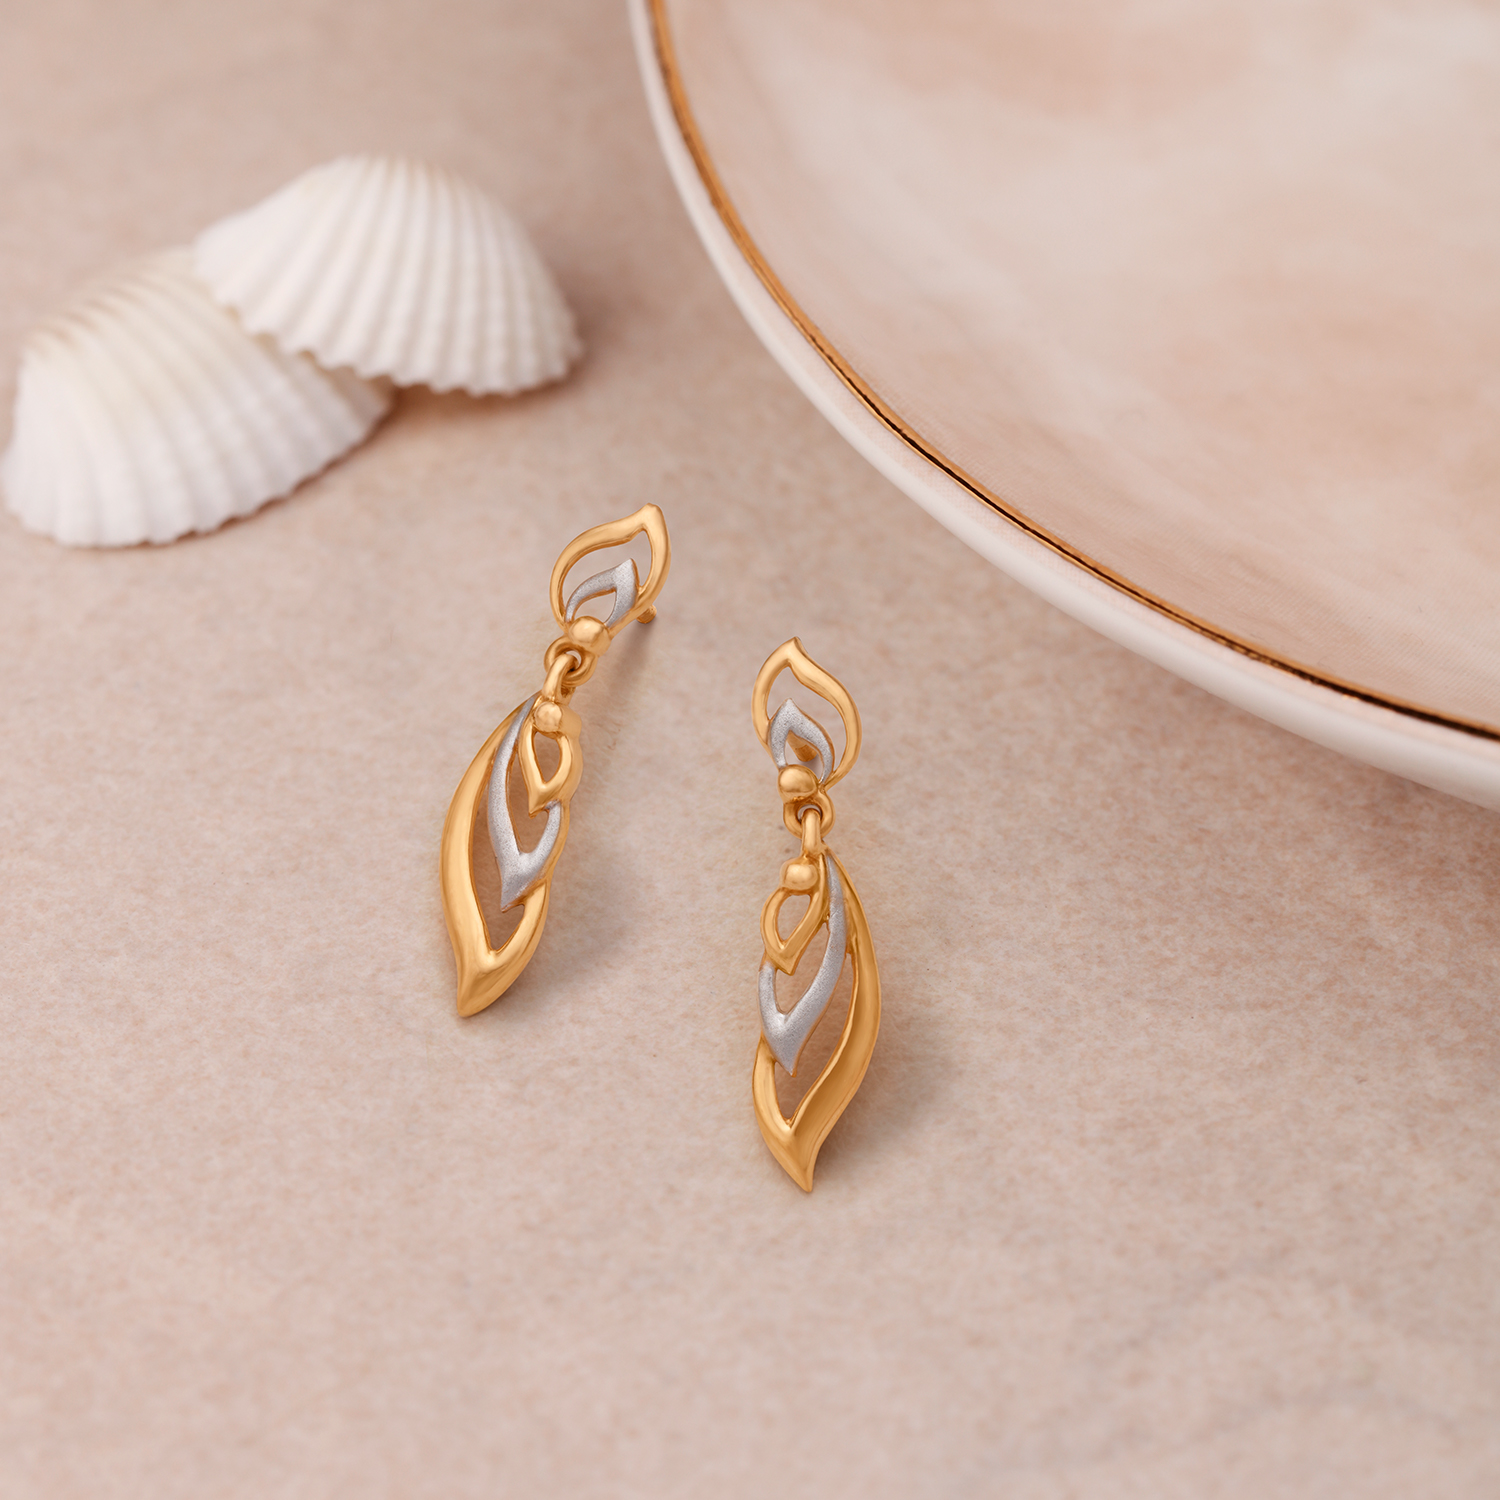 Tarellis Nature Inspired Earrings with Leaf Design  Ken  Dana Design